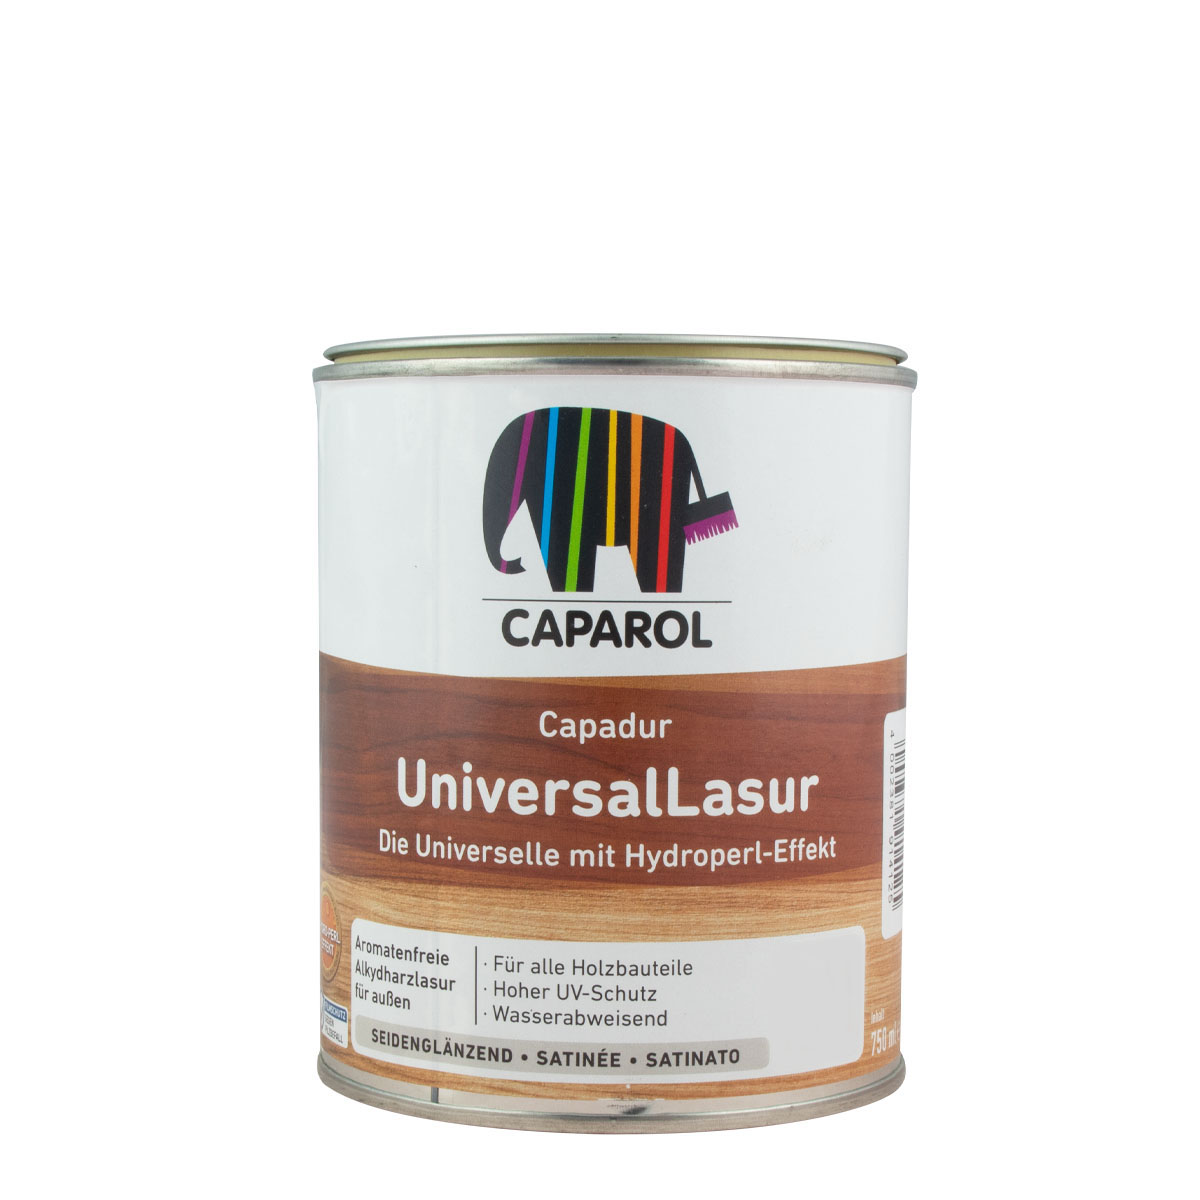 Caparol Capadur Universal Lasur 750ml, Walnuss